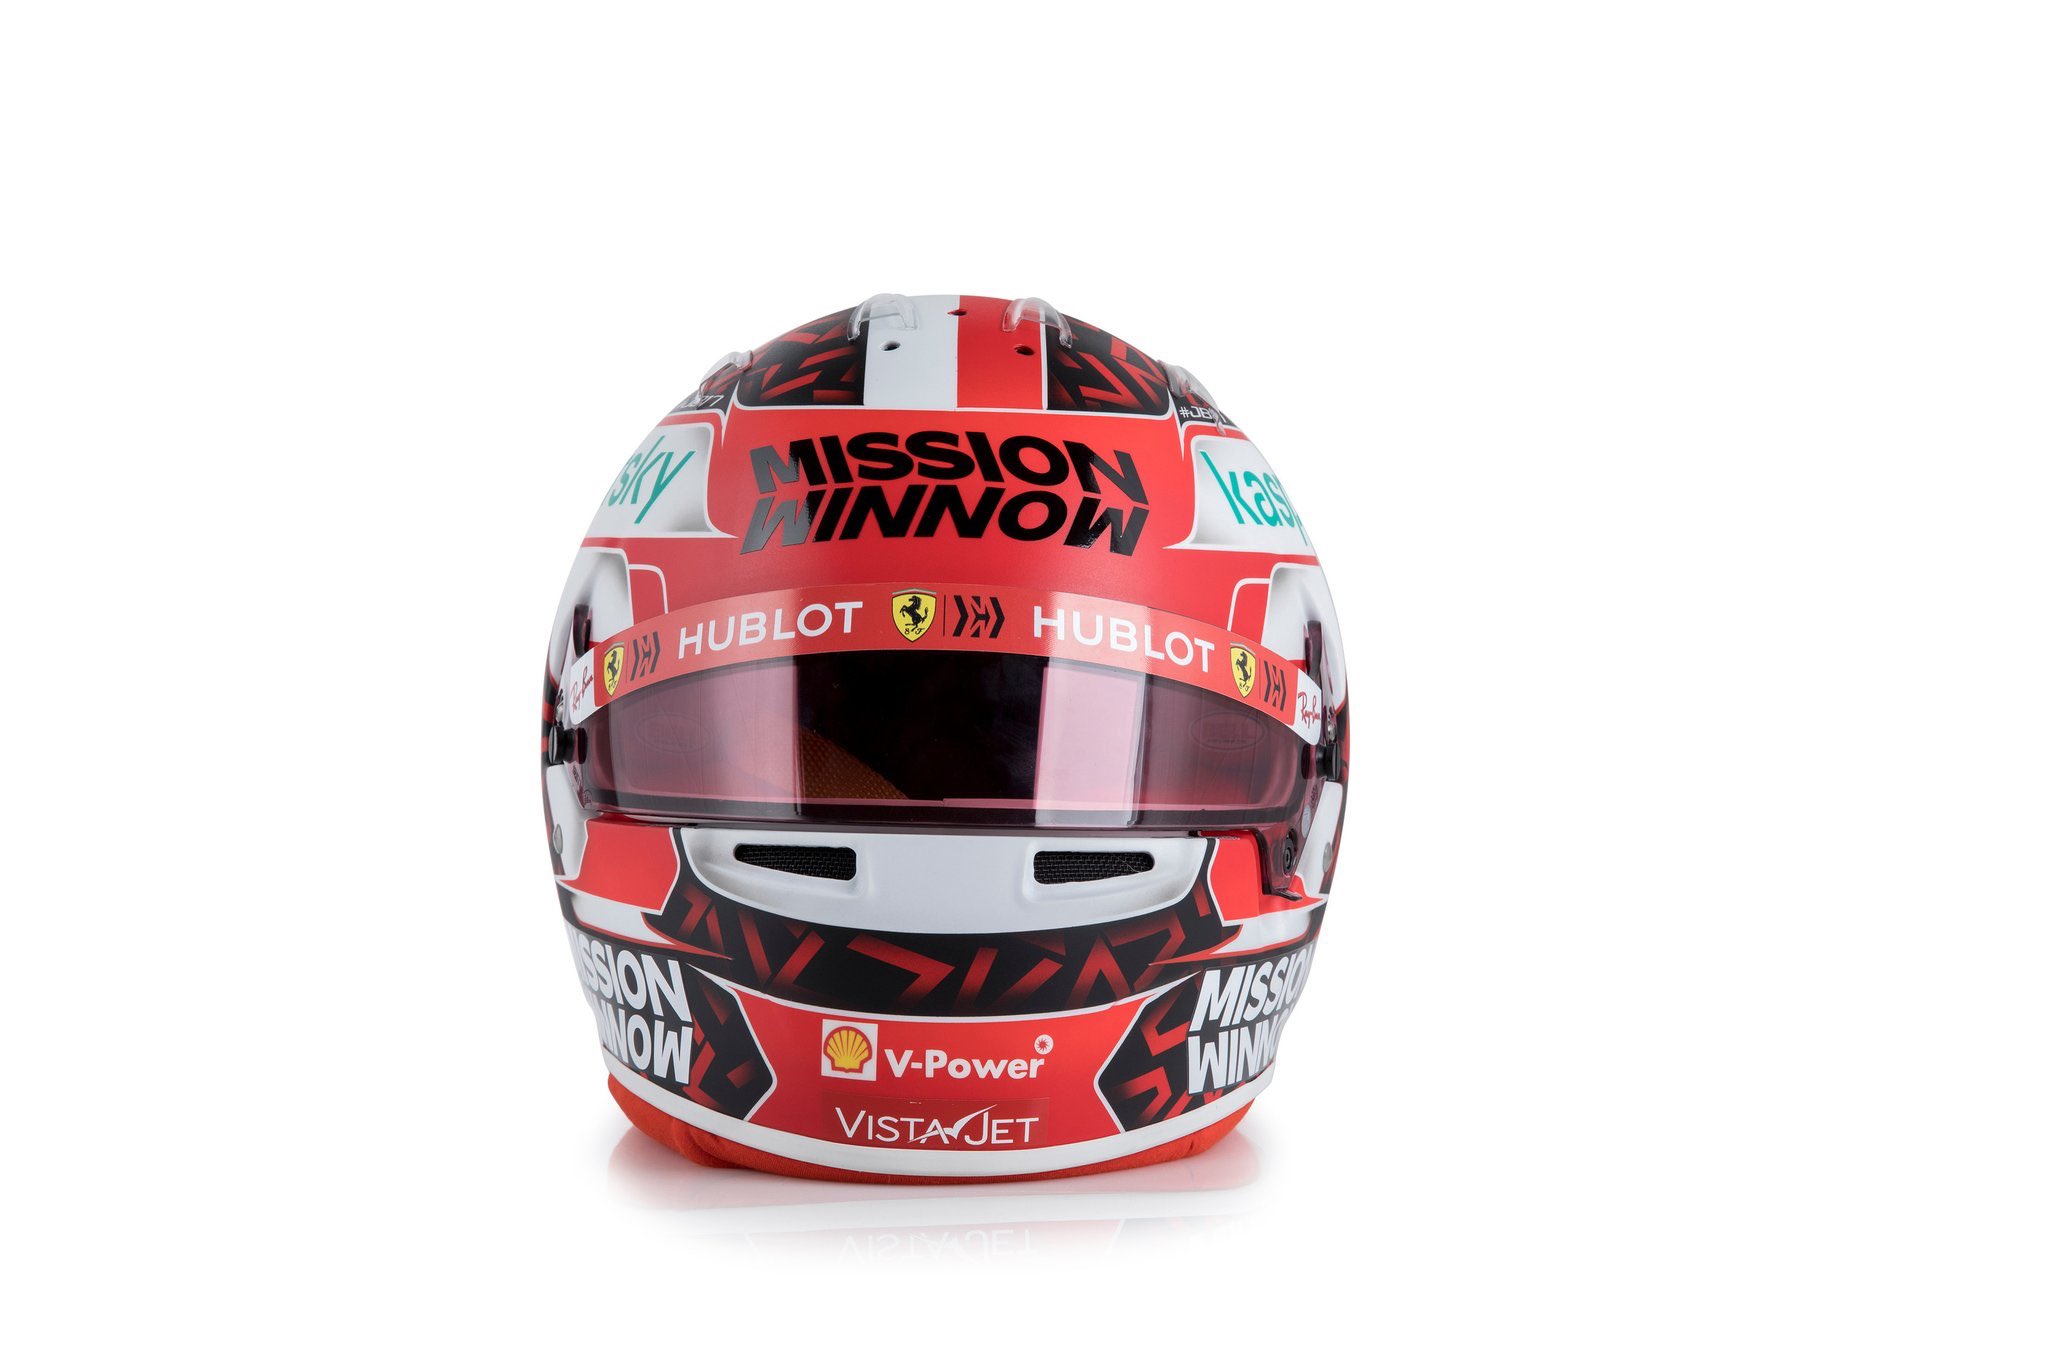 Photos and video: Charles Leclerc's 2020 Ferrari F1 helmet